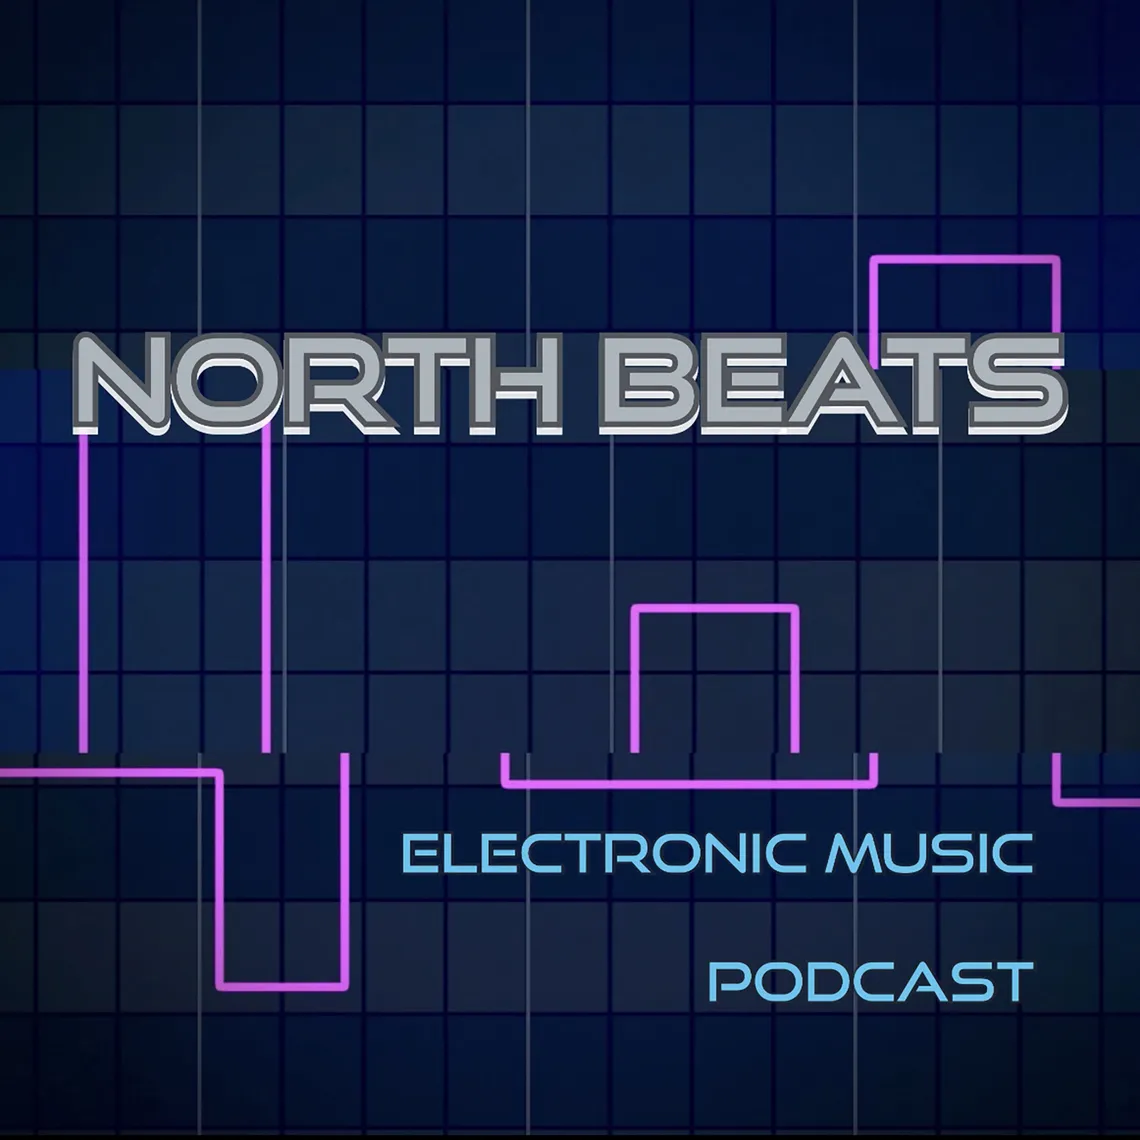 North Beats podcast with entrepreneur Reek Havok (Sounds Amazing)